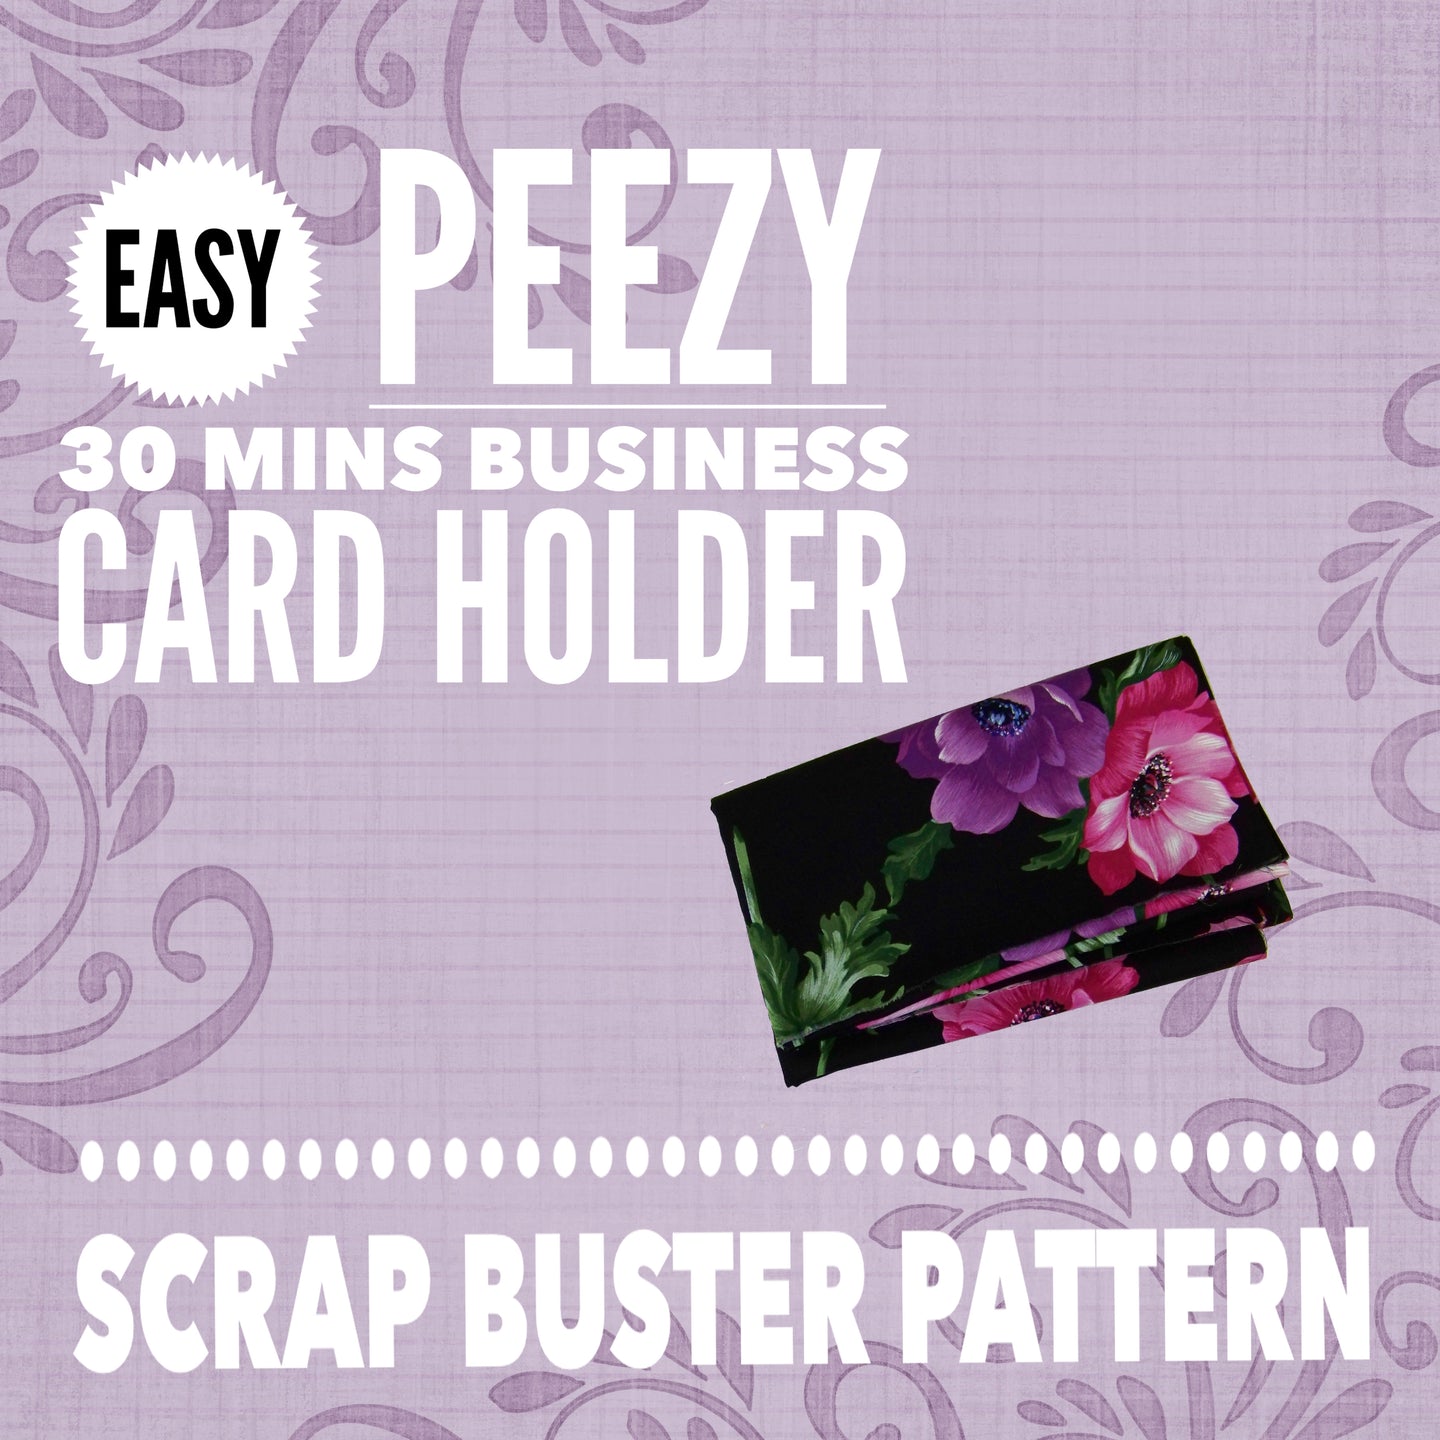 Easy Peezy 30 mins Business Card Holder - Scrap Buster Pattern